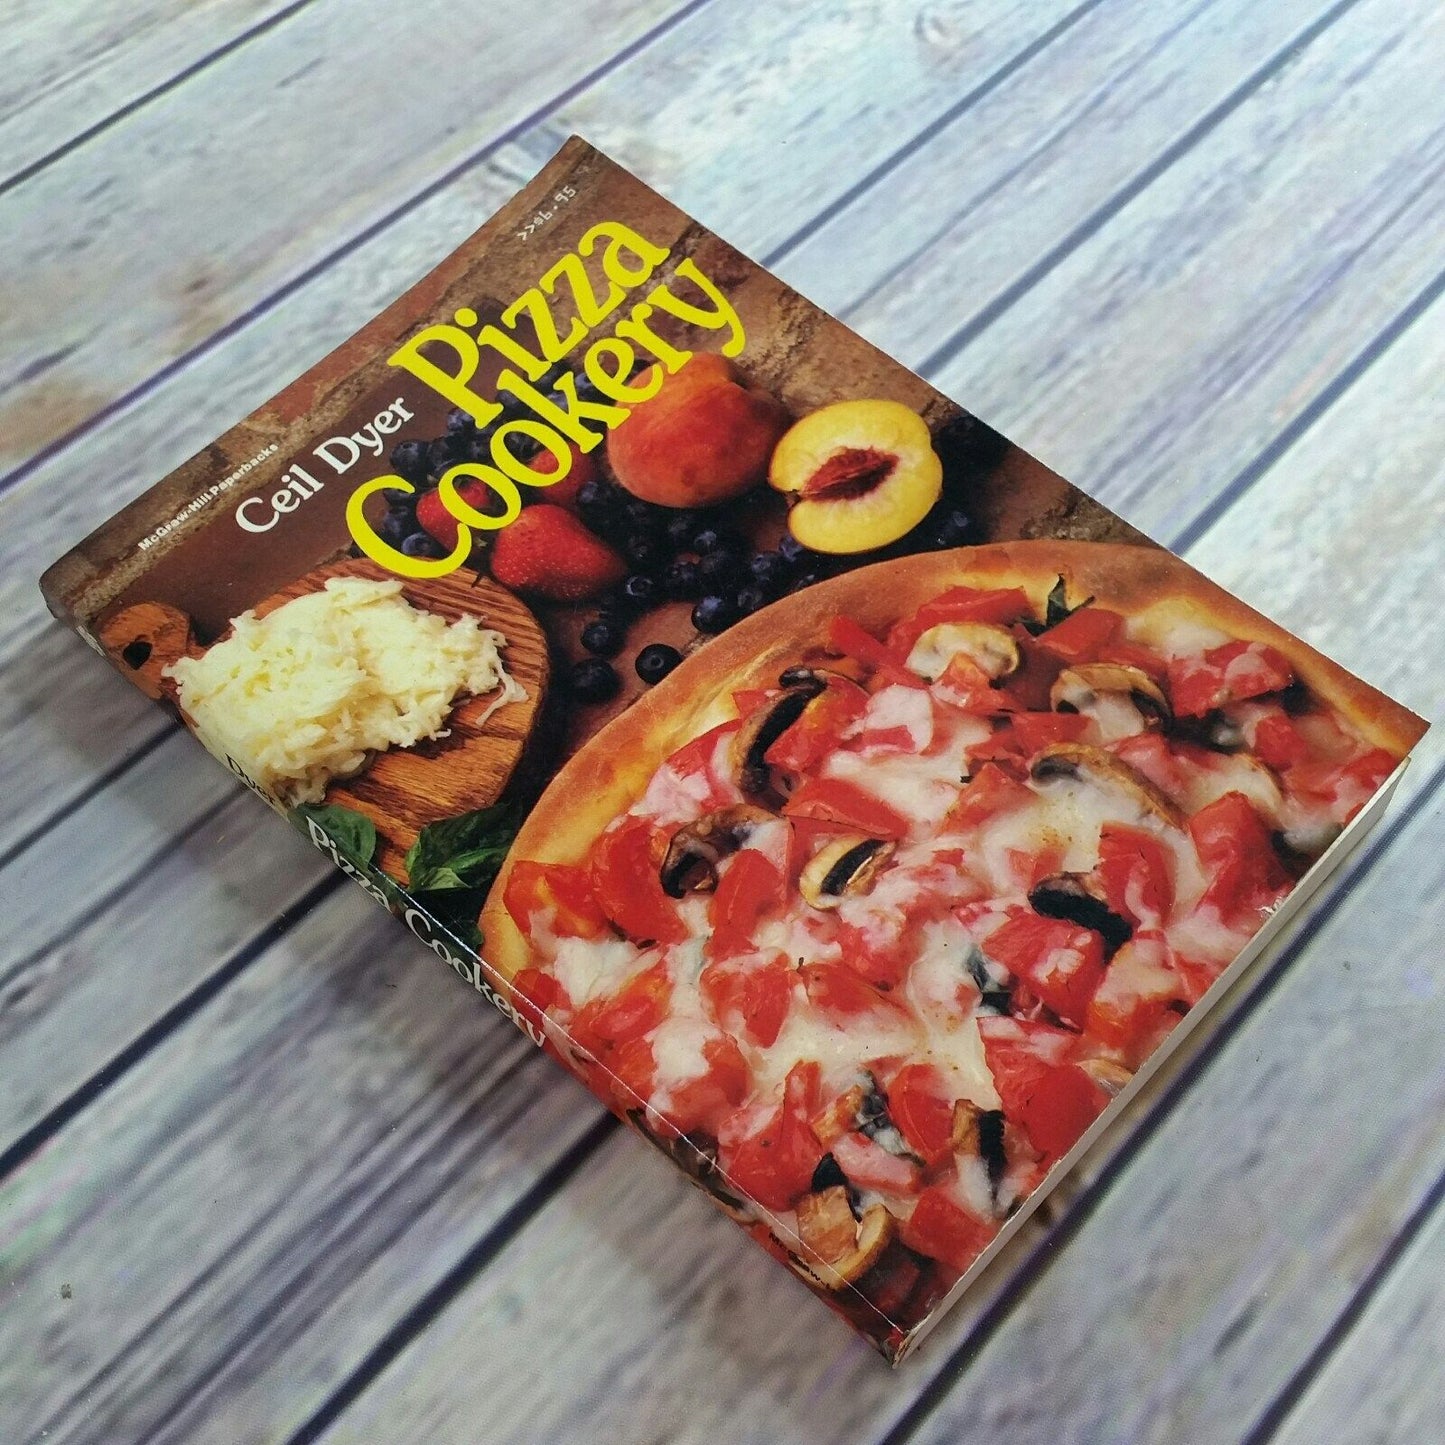 Vintage Cookbook Pizza Cookery Recipes 1984 Ceil Dyer Paperback Pizza Breads Dough Sauces Toppings Appetizer Pizzas Double Quick